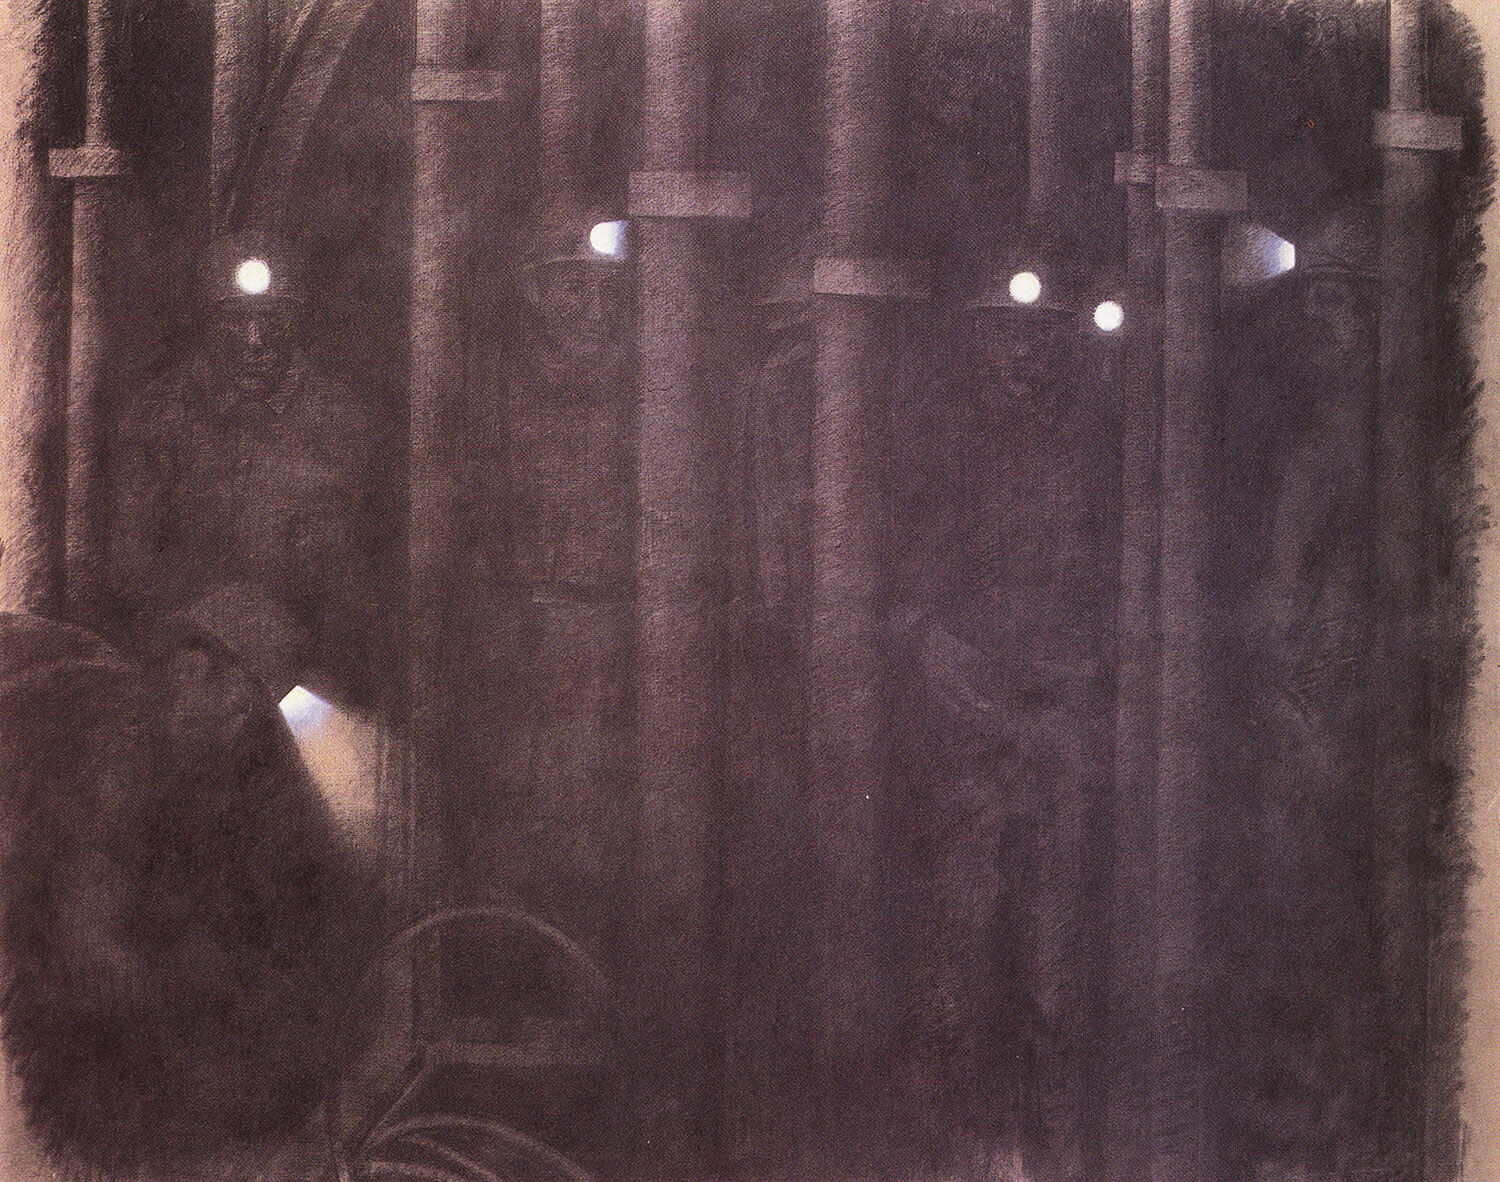 Jürgen Waller, Down the Mines 2, 1985, charcoal on canvas, 200 x 250 cm